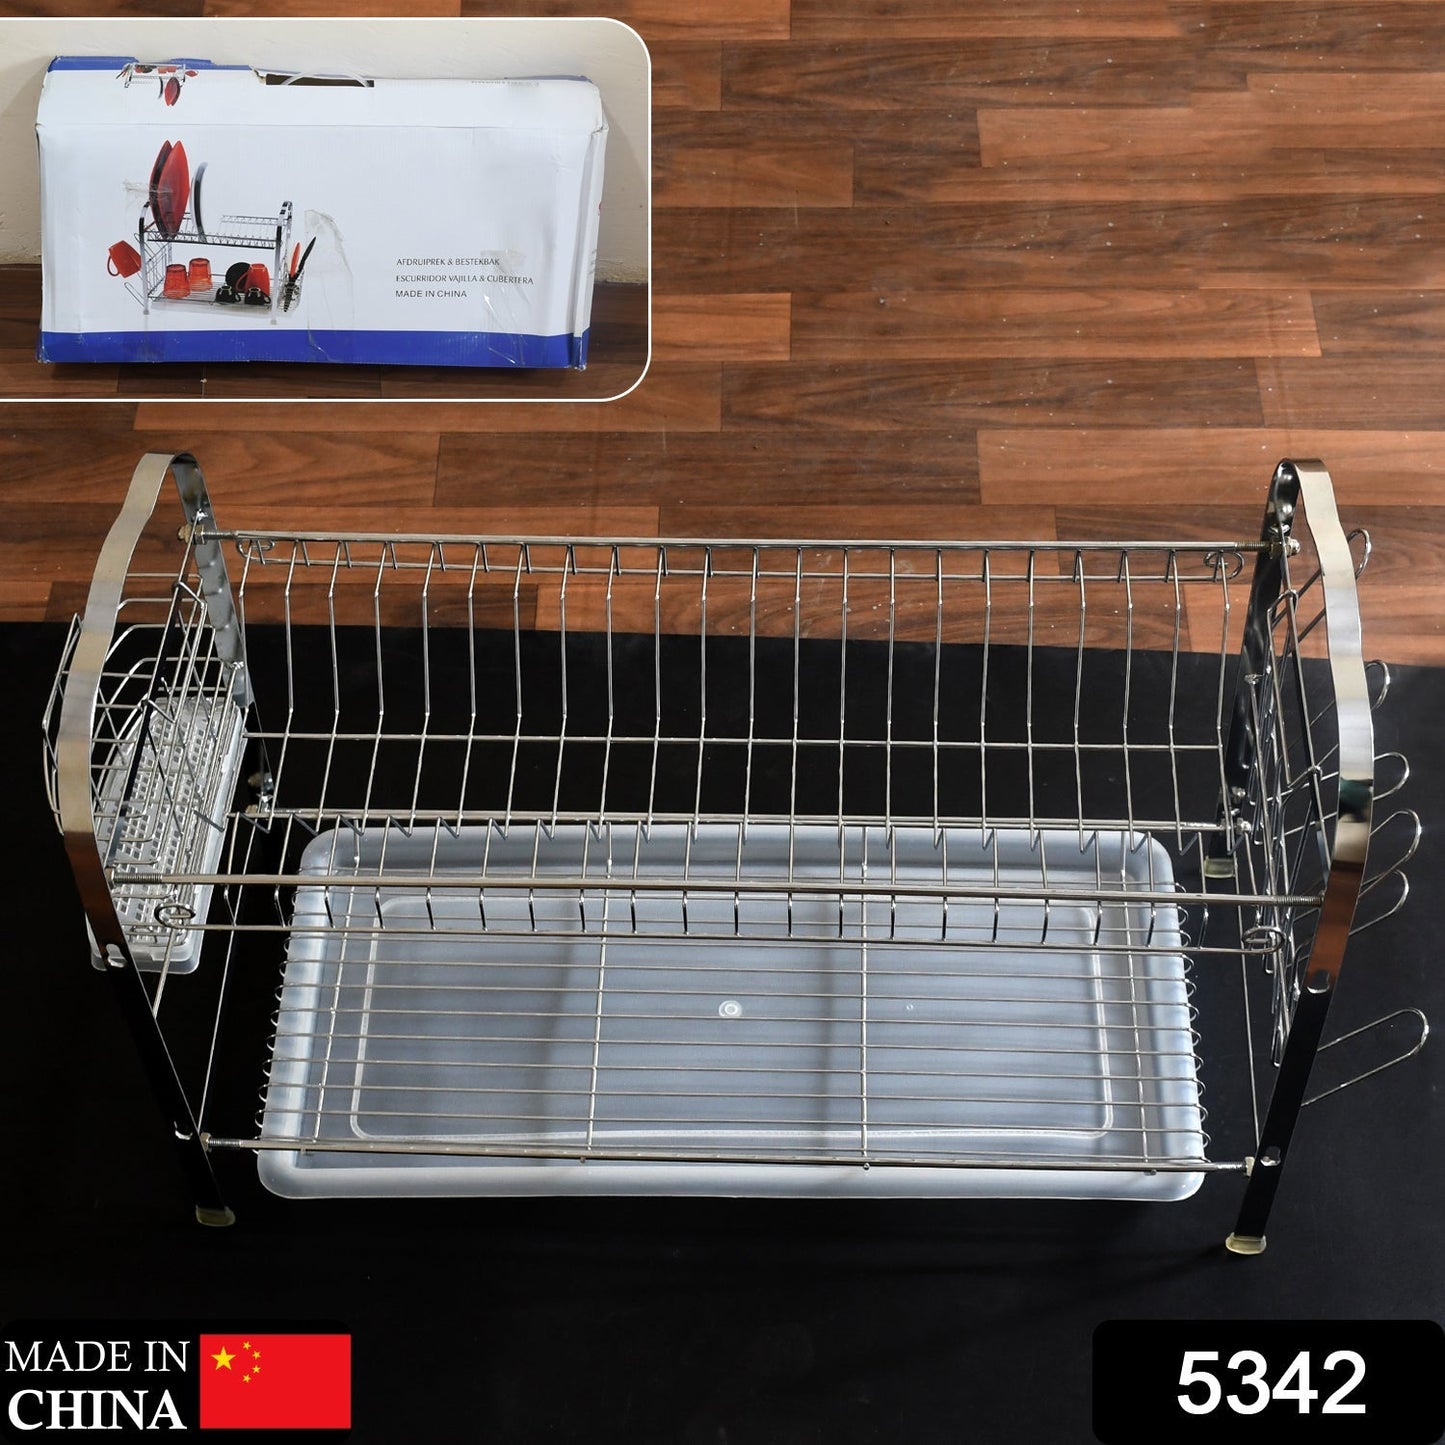 Kitchenware Steel Rack Dish Drainer 58cm For Home & Kitchen Use